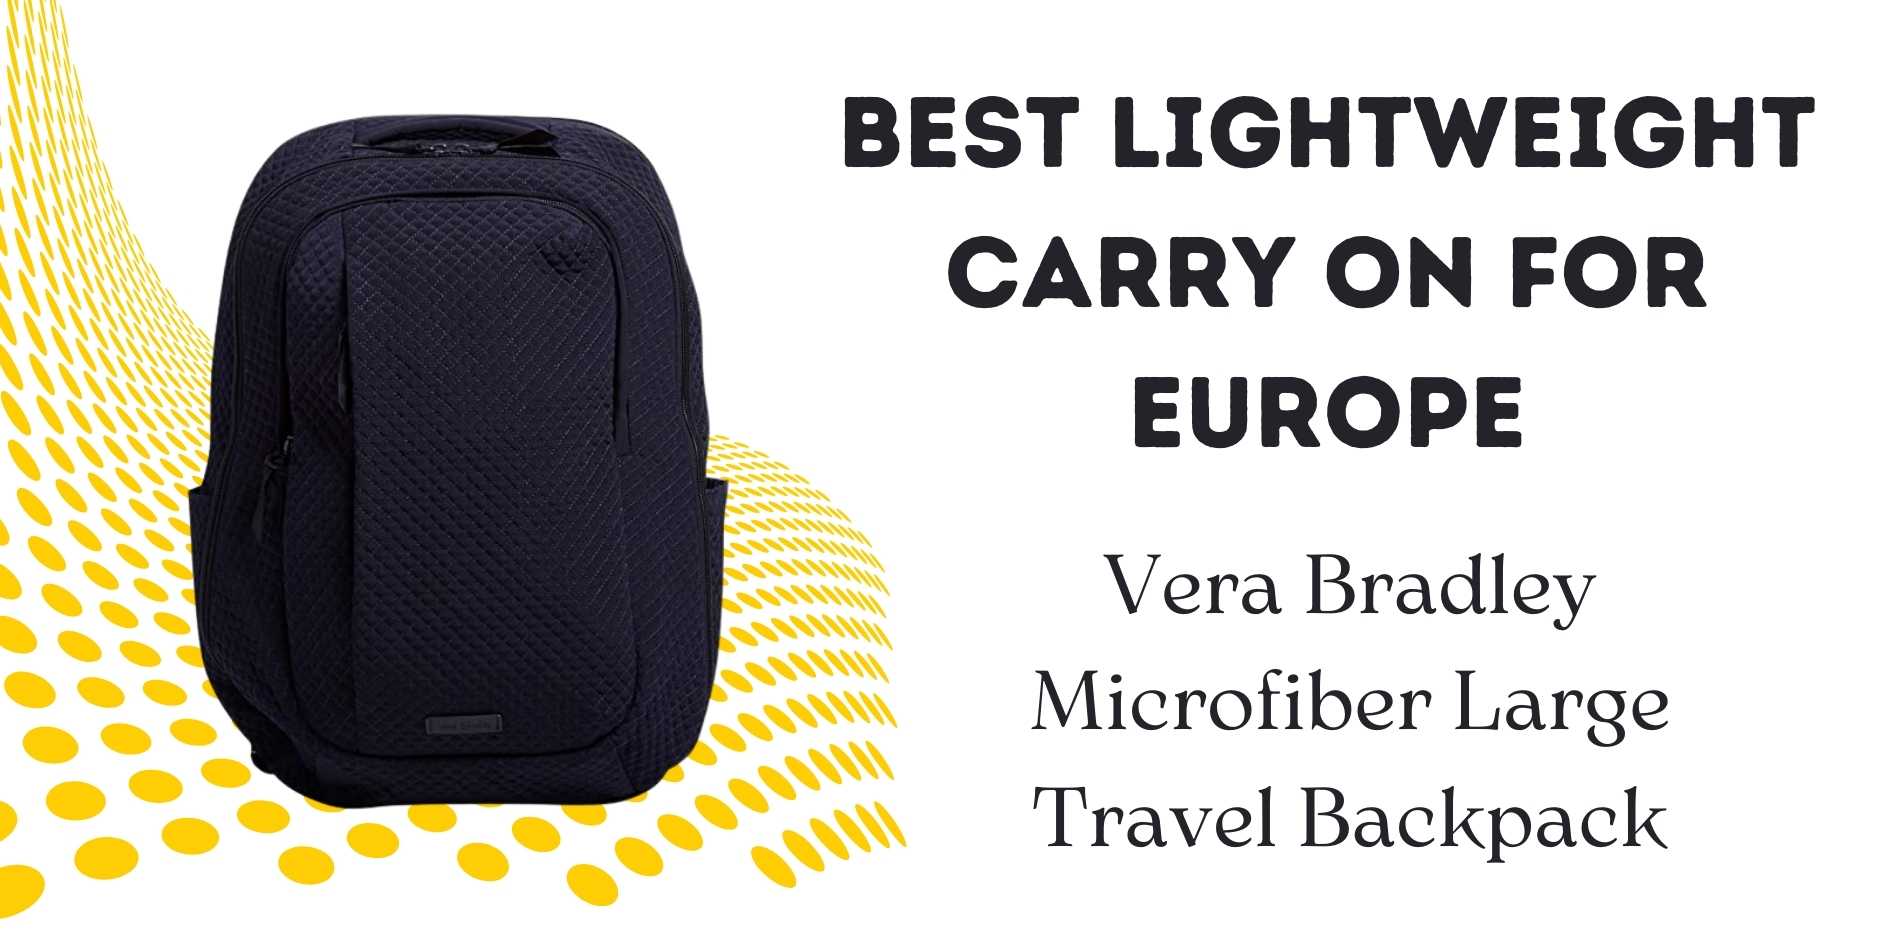 Vera Bradley Microfiber Large Travel Backpack